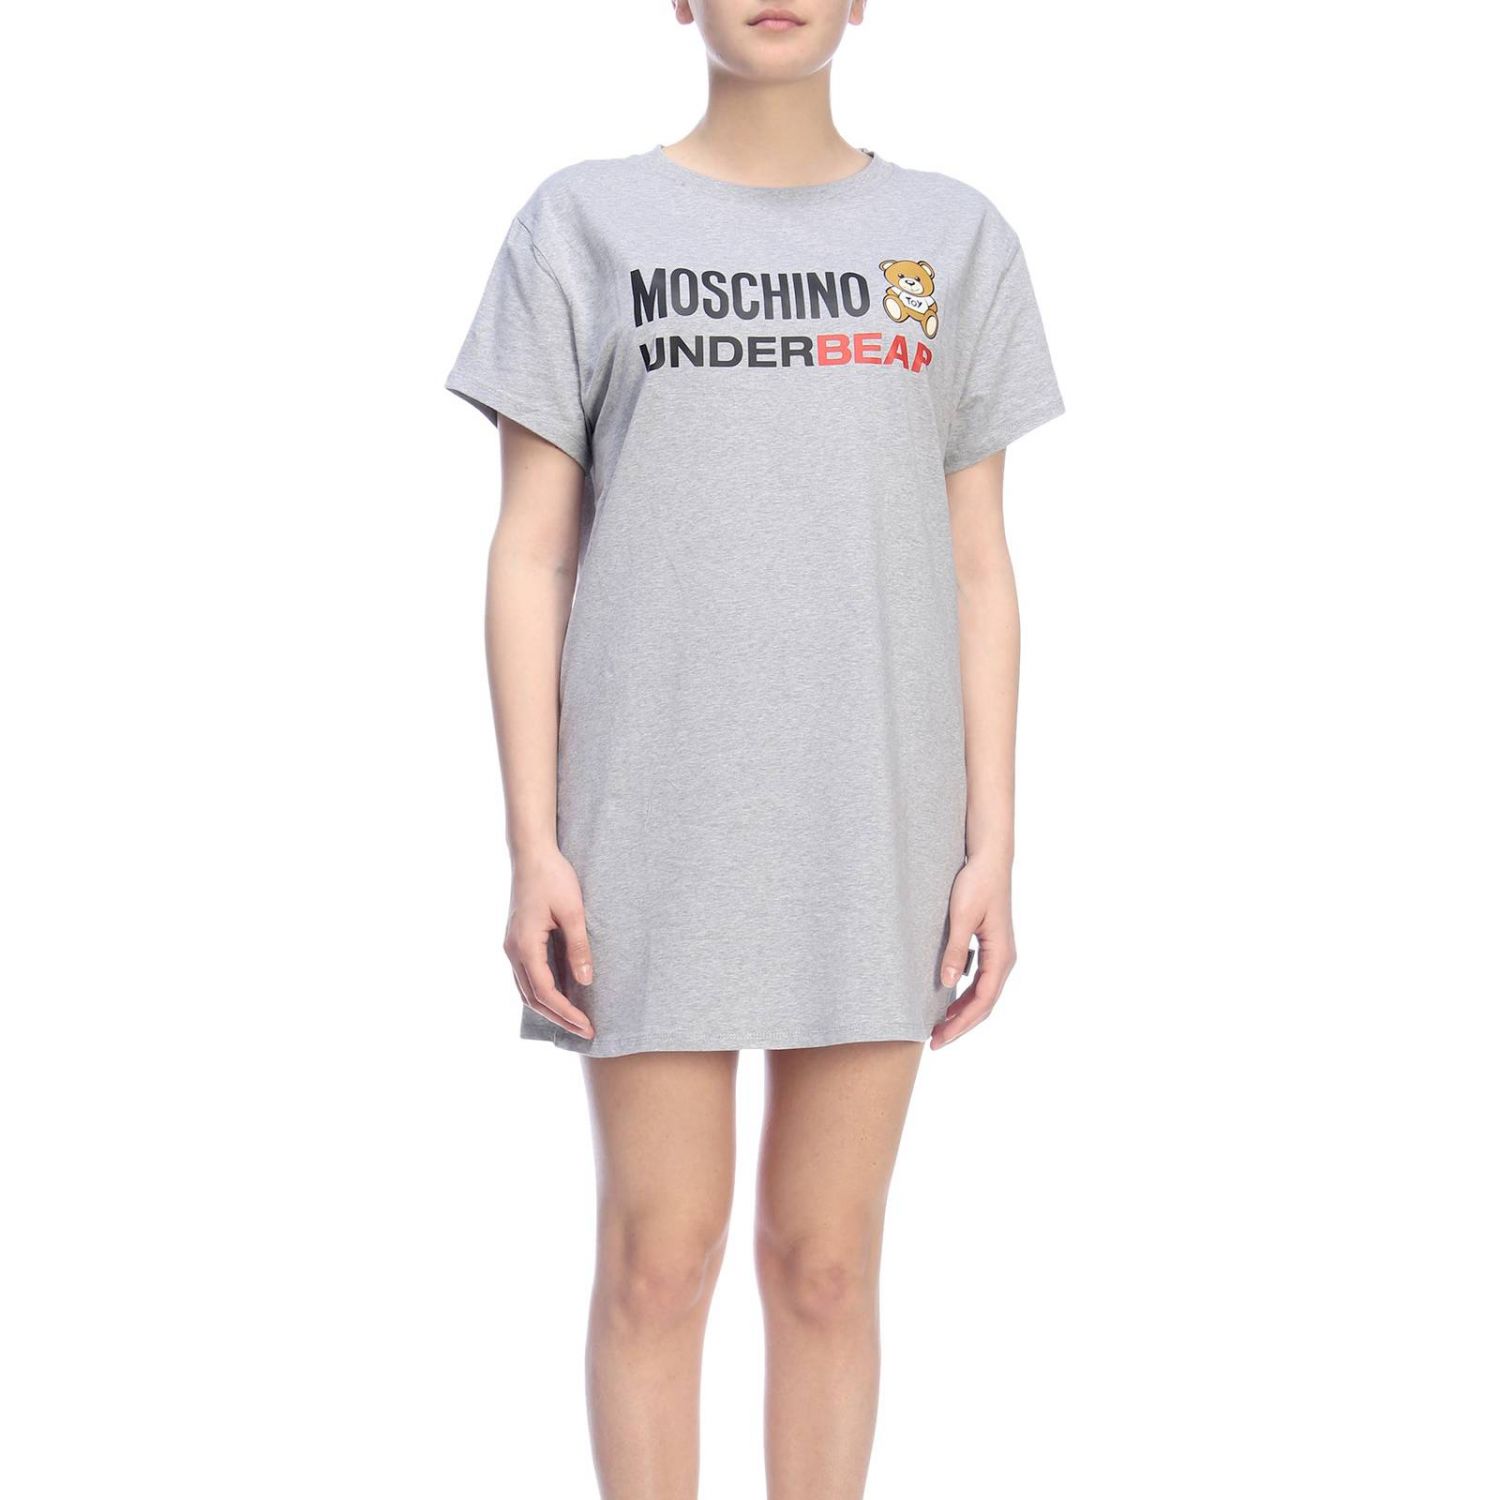 Moschino Outlet: T-shirt women Underbear - Grey | T-Shirt Moschino ...